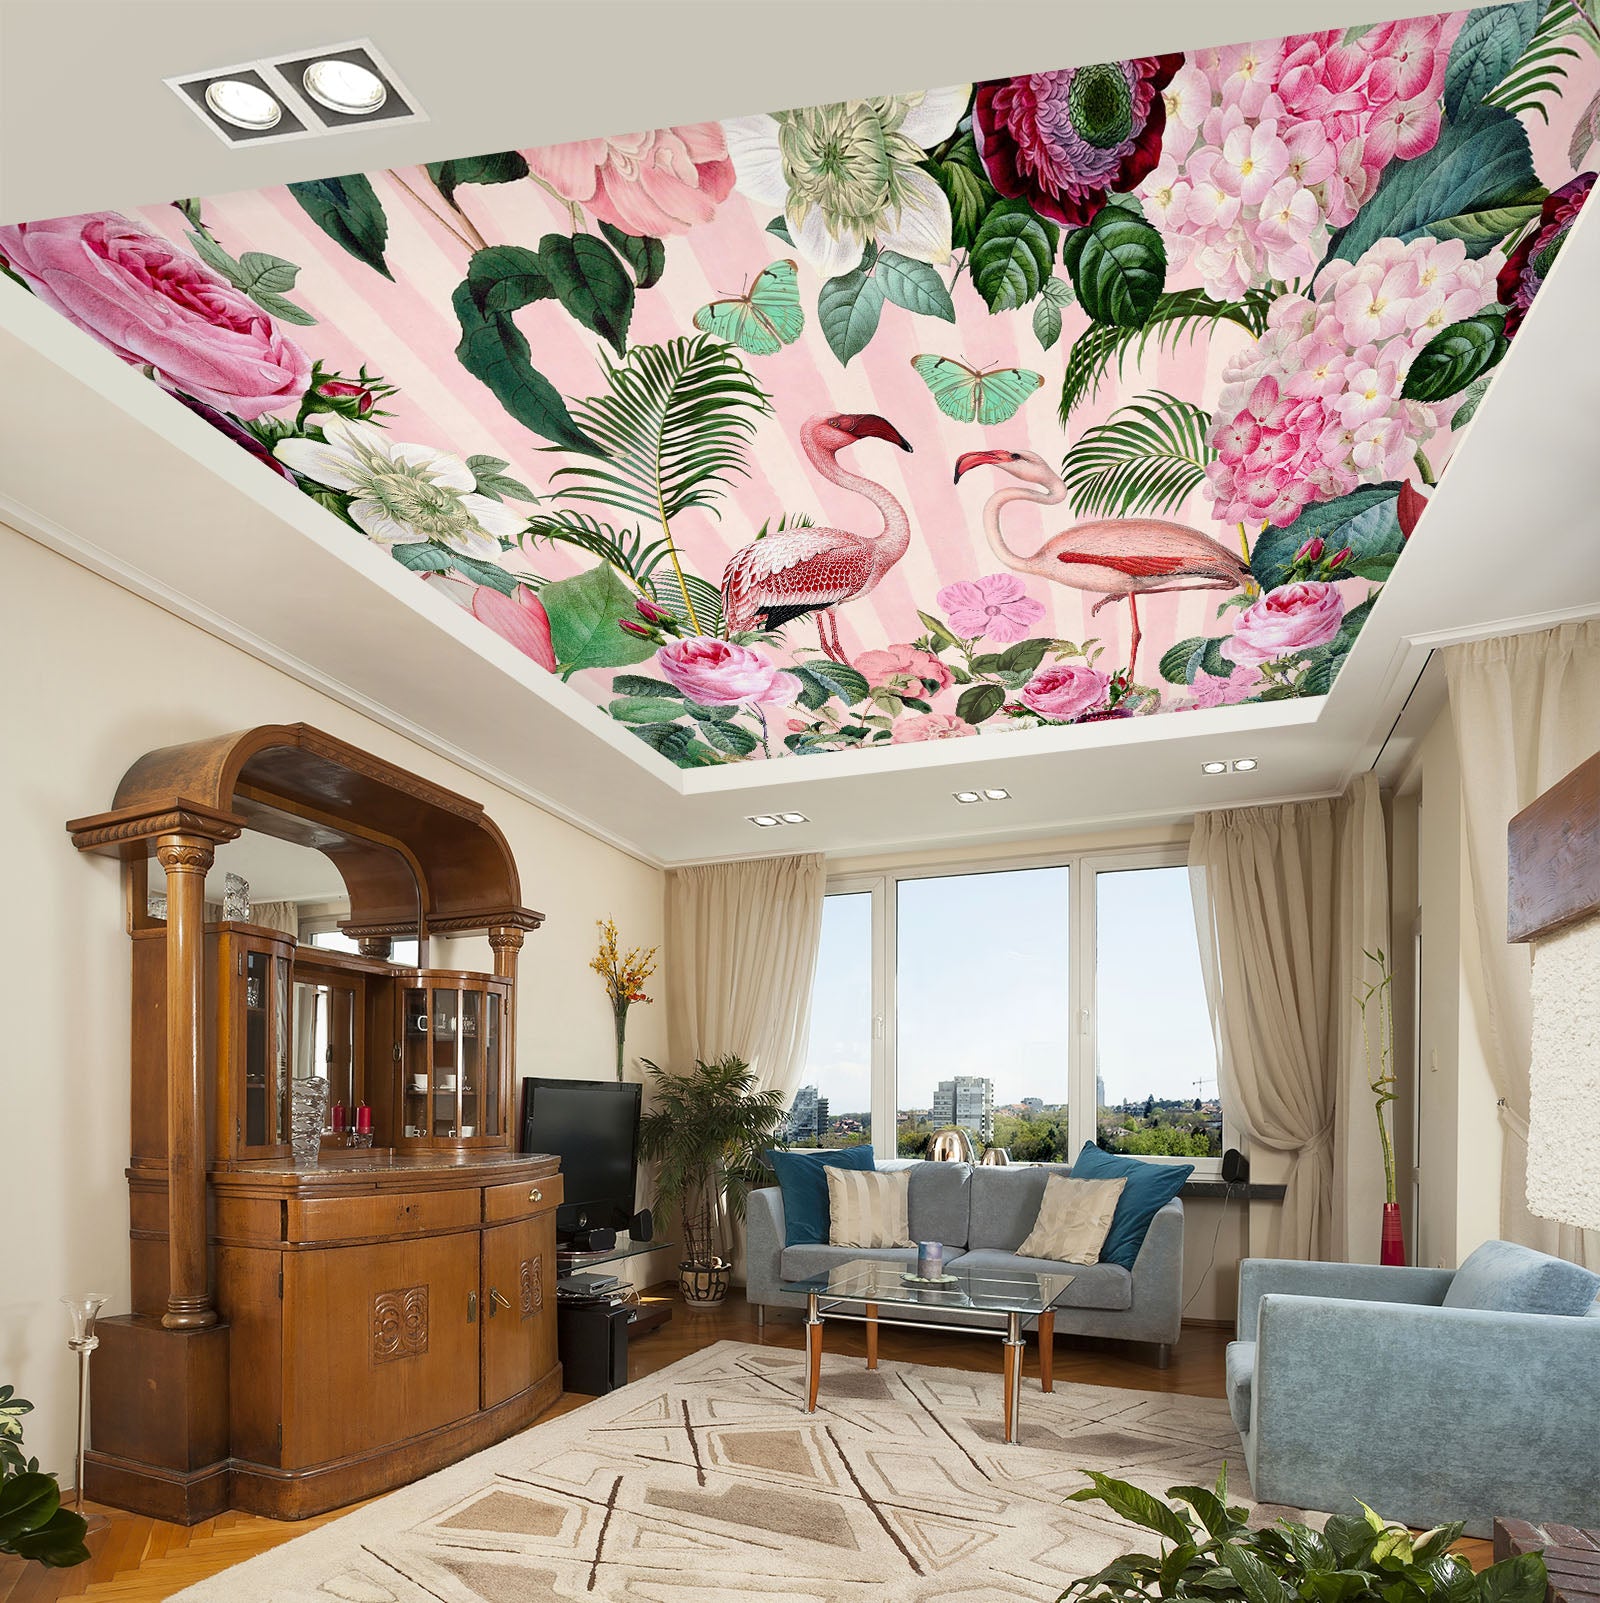 3D Flamingo Flower 975 Andrea Haase Ceiling Wallpaper Murals